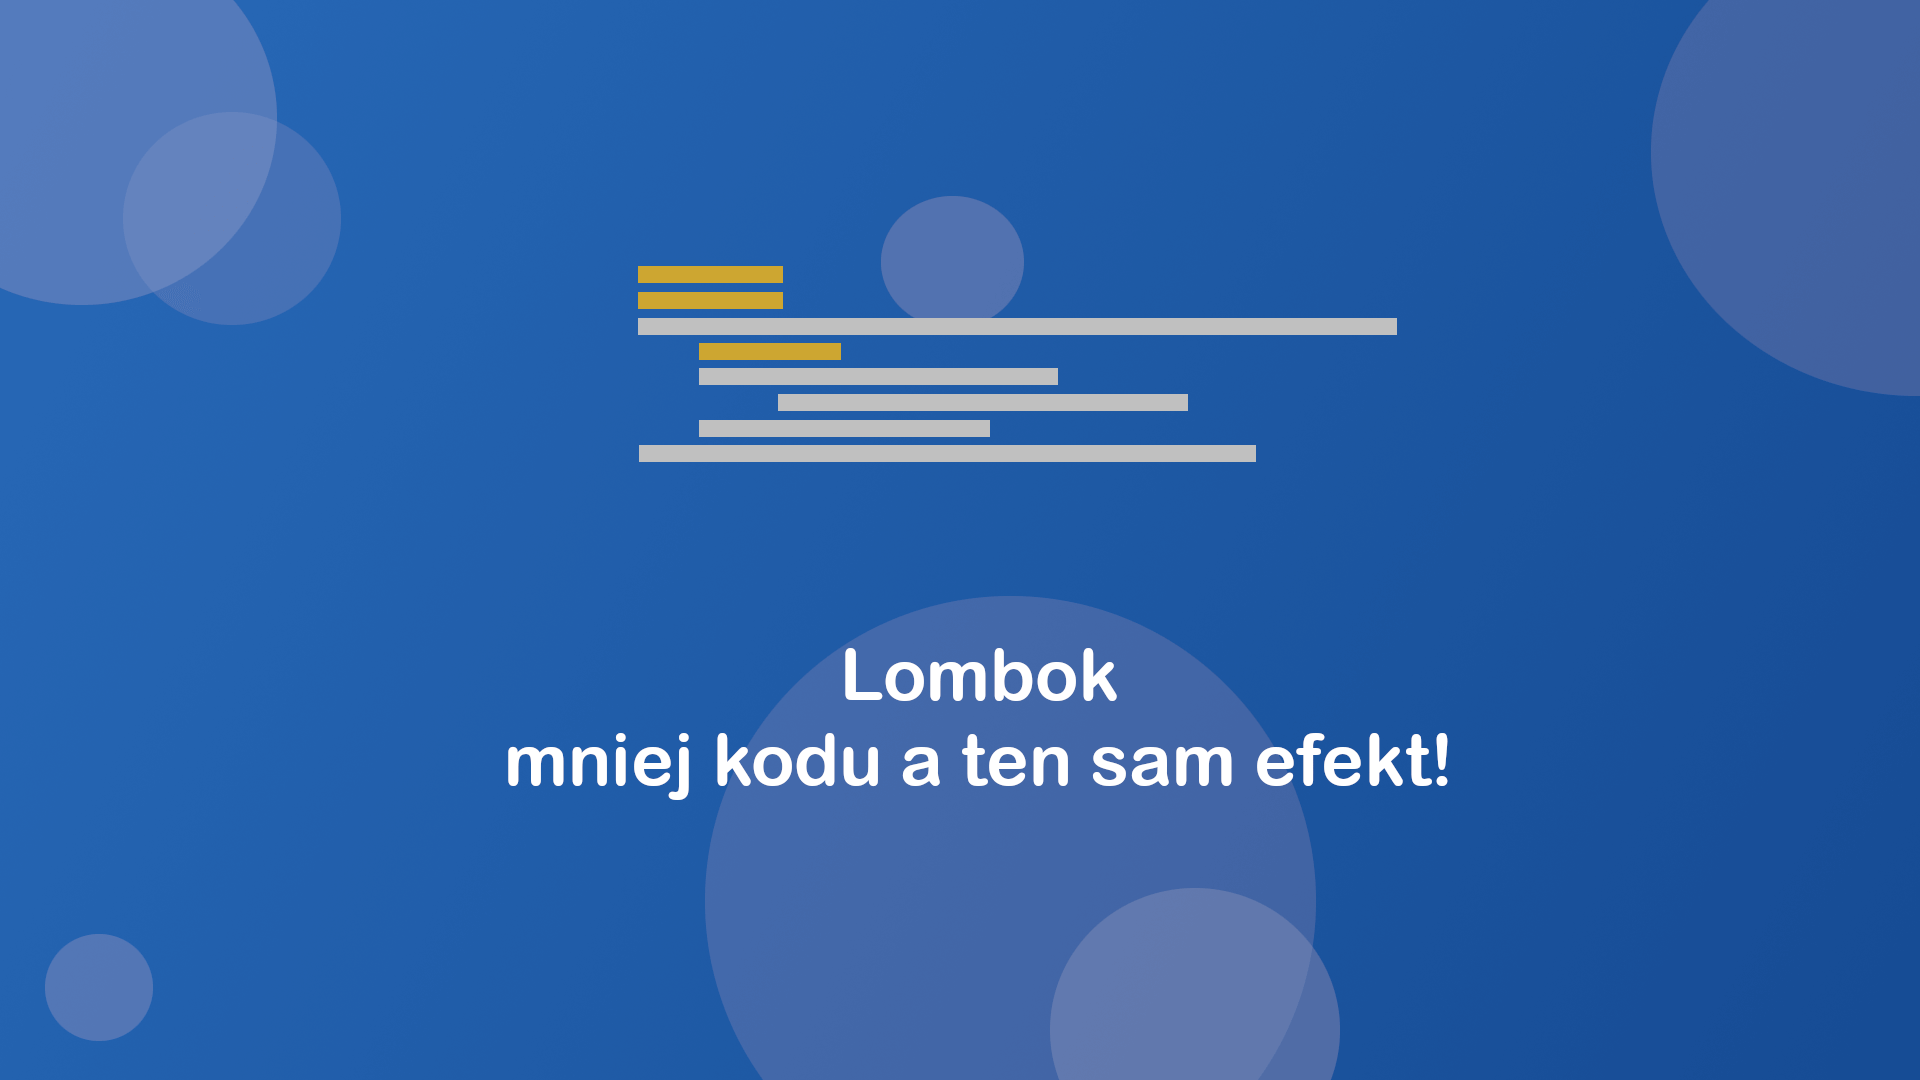 Lombok – mniej kodu a ten sam efekt!